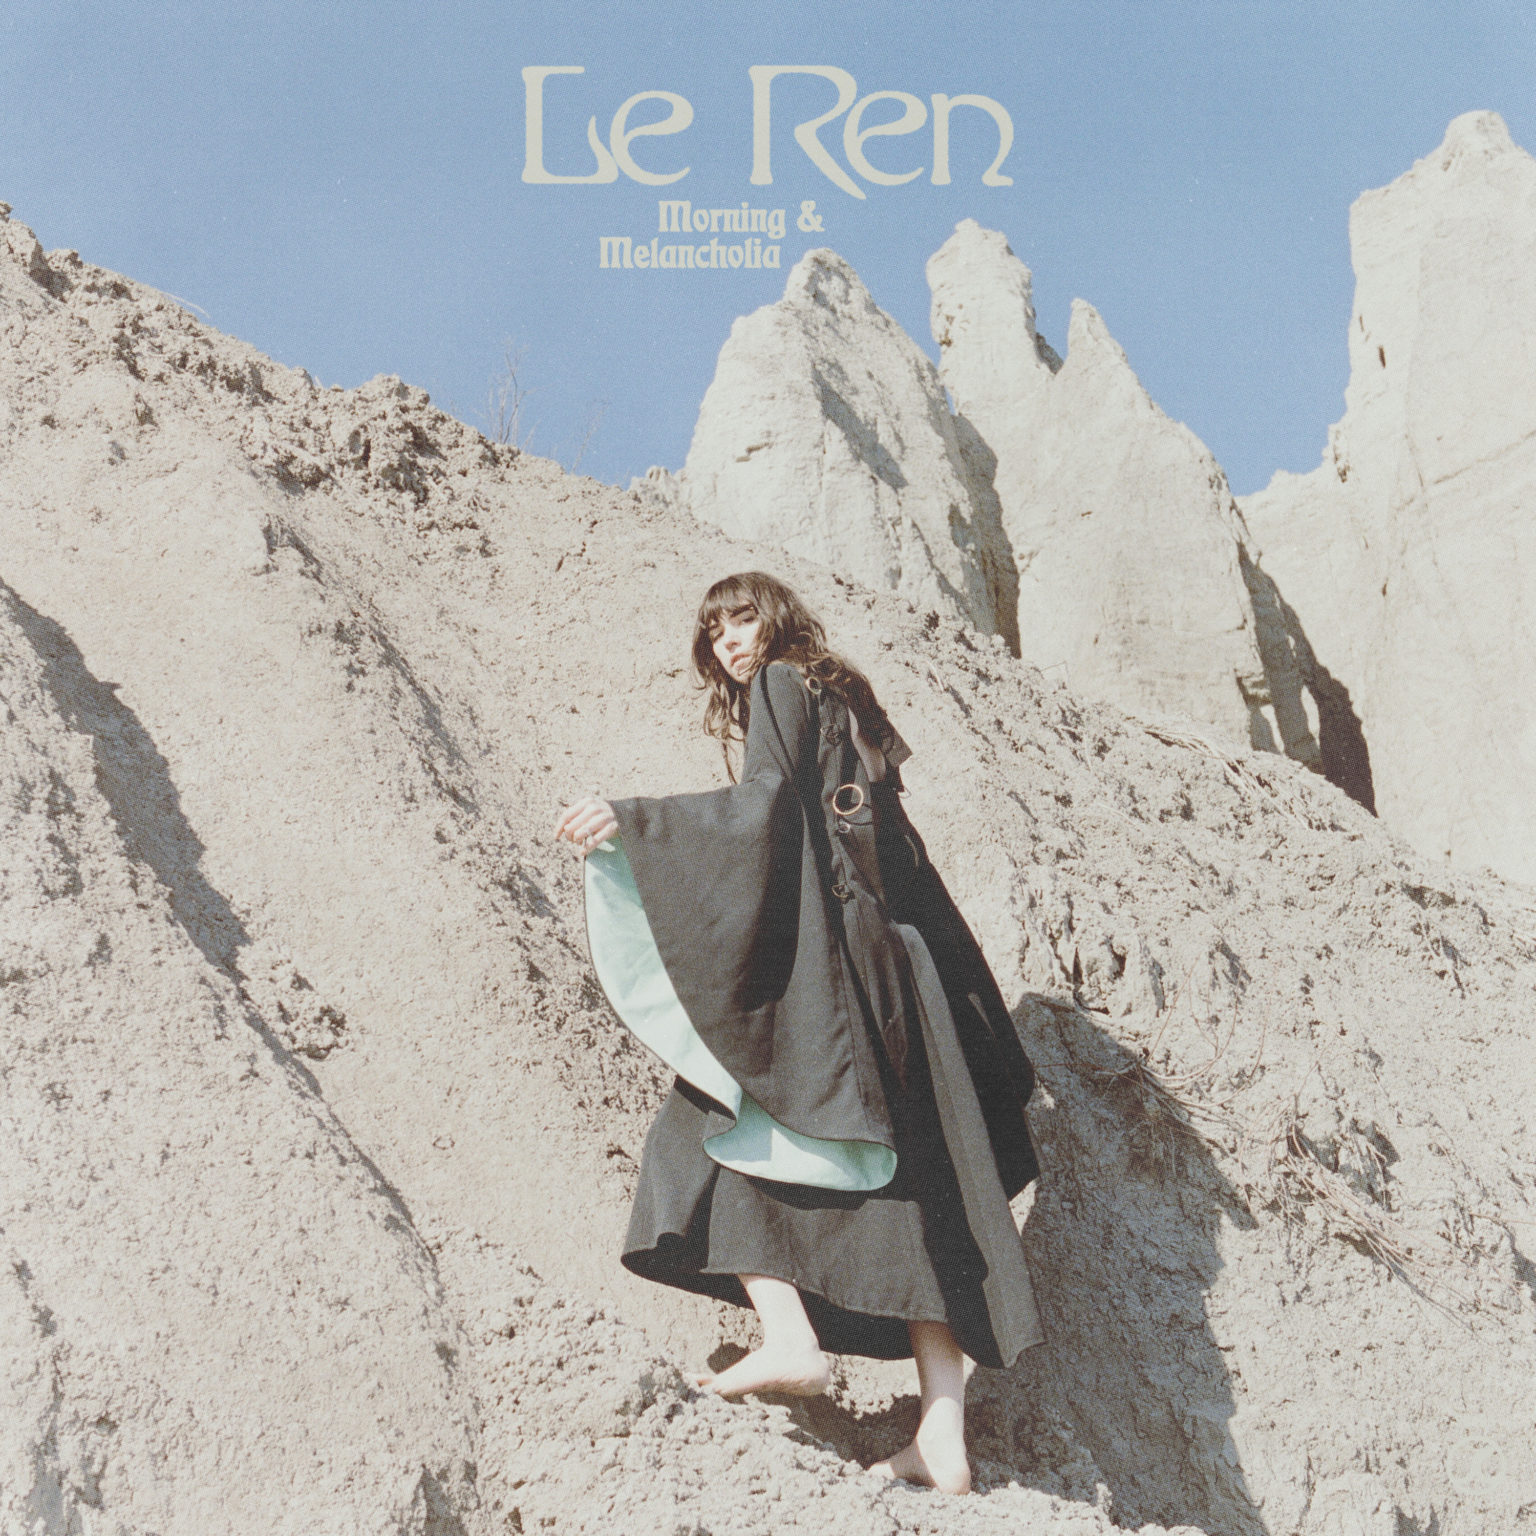 Le Ren shares details of new EP 'Morning & Melancholia'